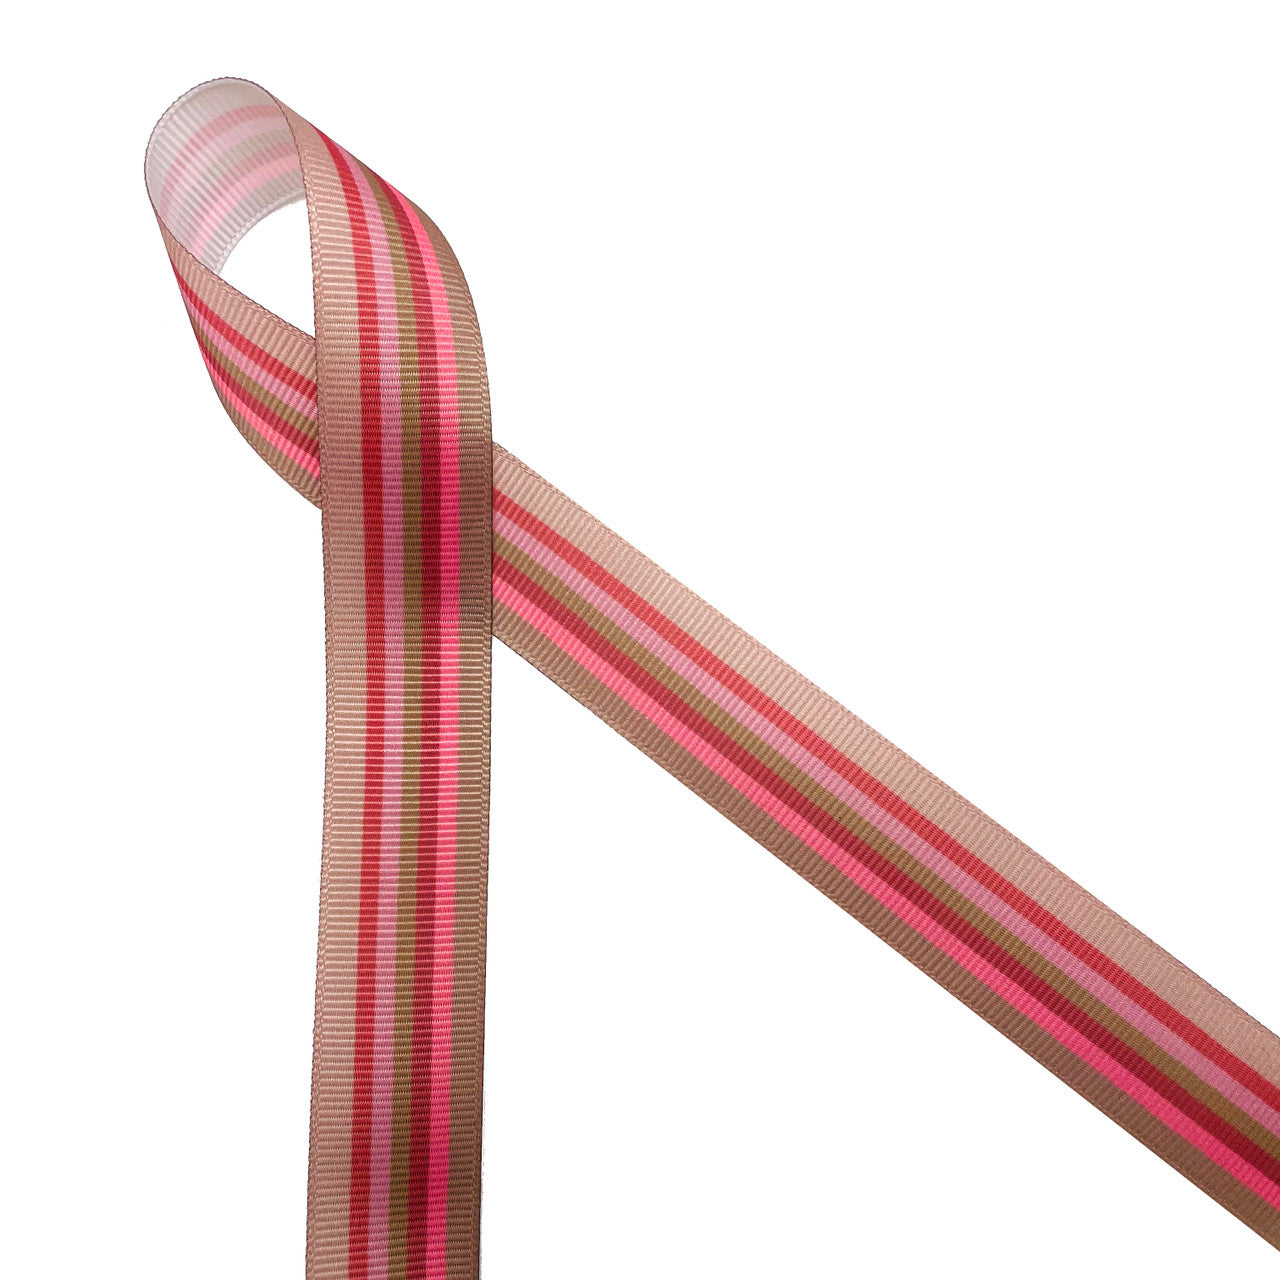 Spring Stripe ribbon in pink, cream, beige printed on 7/8" white grosgrain